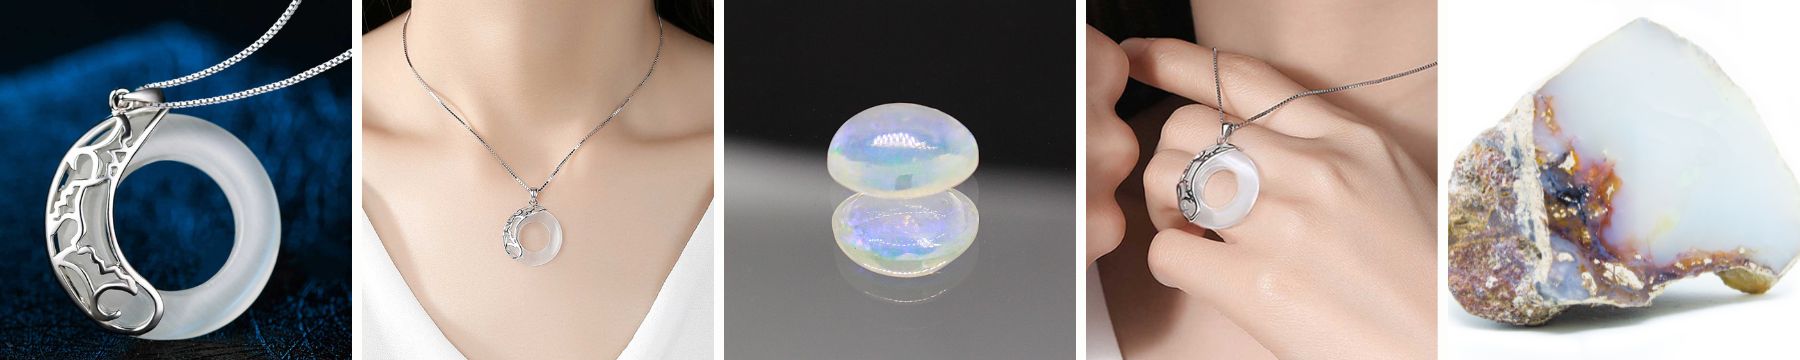 October birthstone - opal